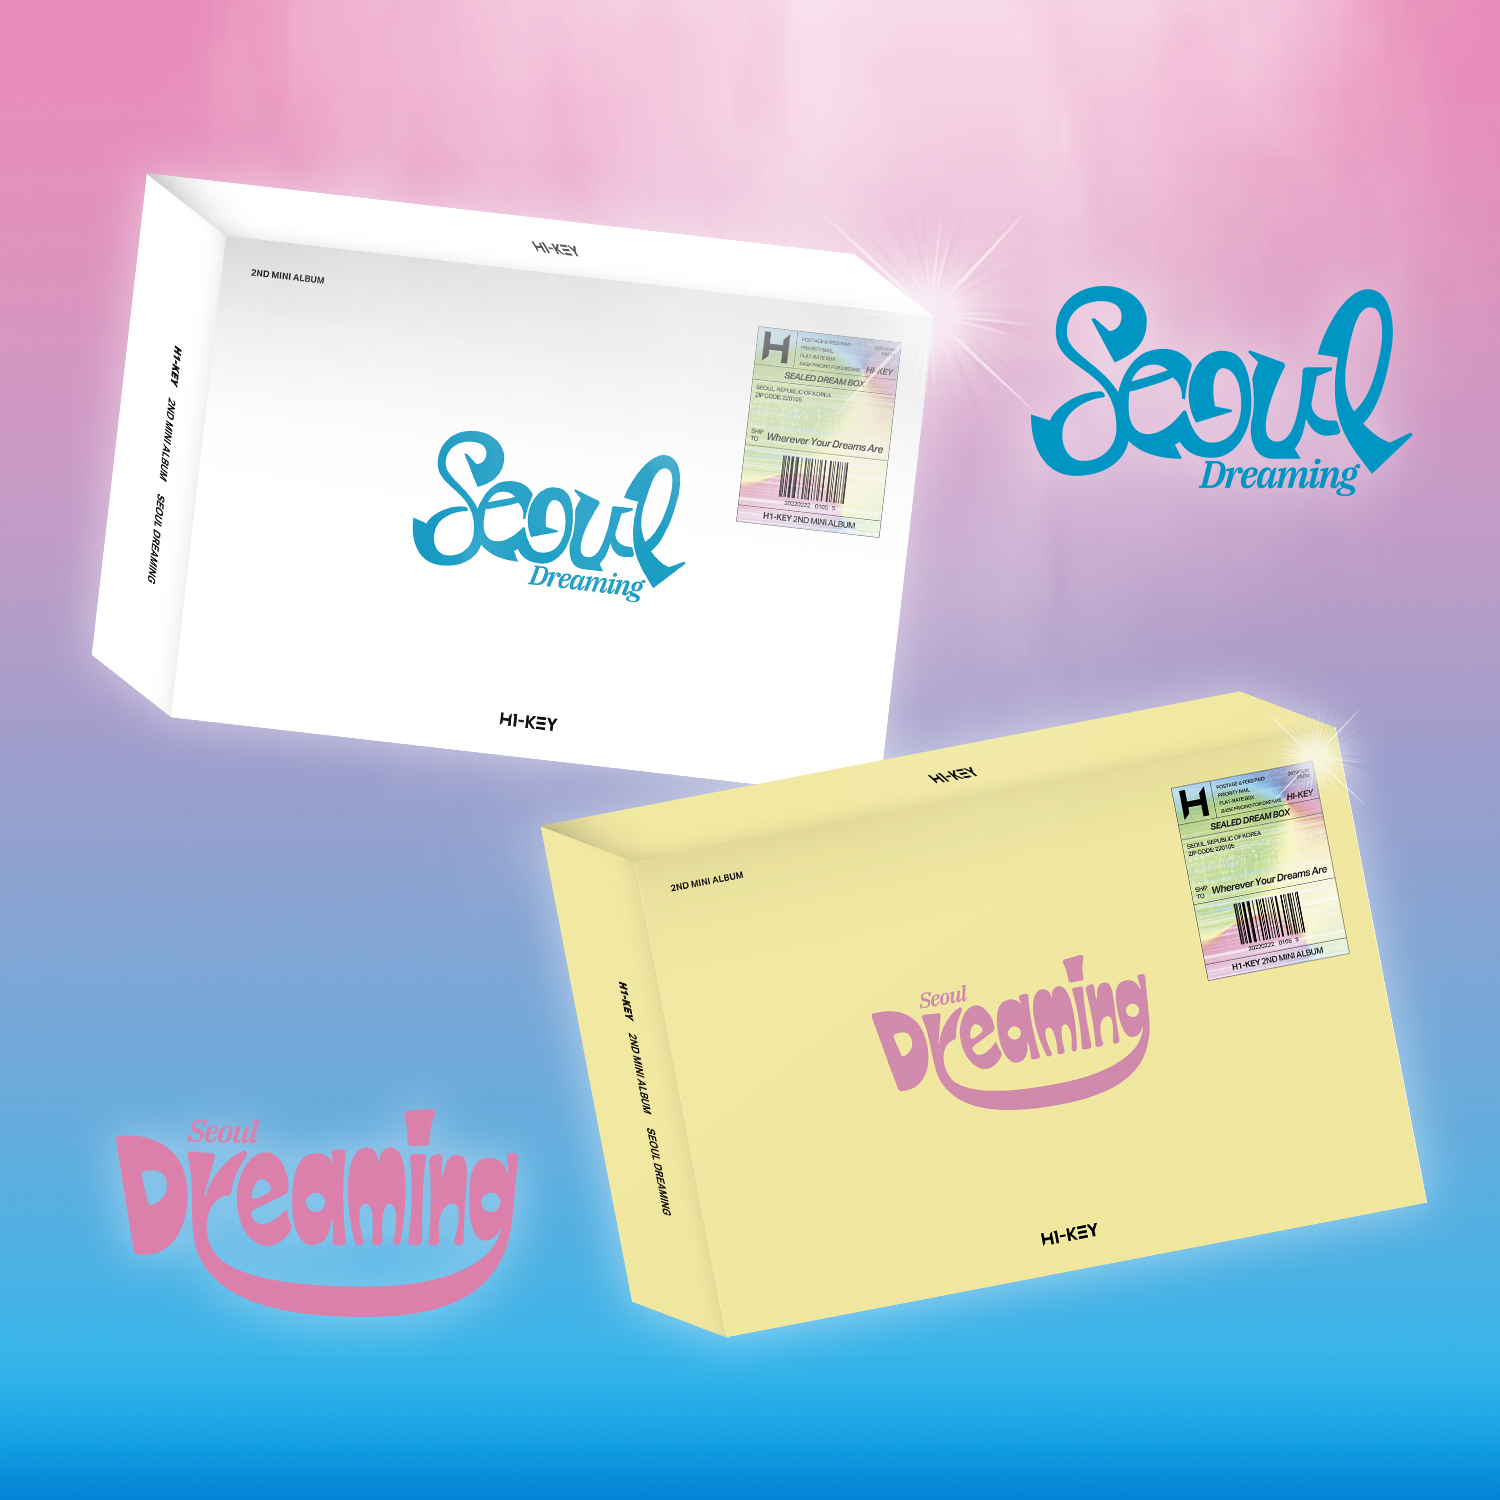 [全款 裸专][视频签售活动] [2CD 套装] H1-KEY - 迷你2辑 [Seoul Dreaming] (Seoul Ver. + Dreaming Ver.)_四站联合